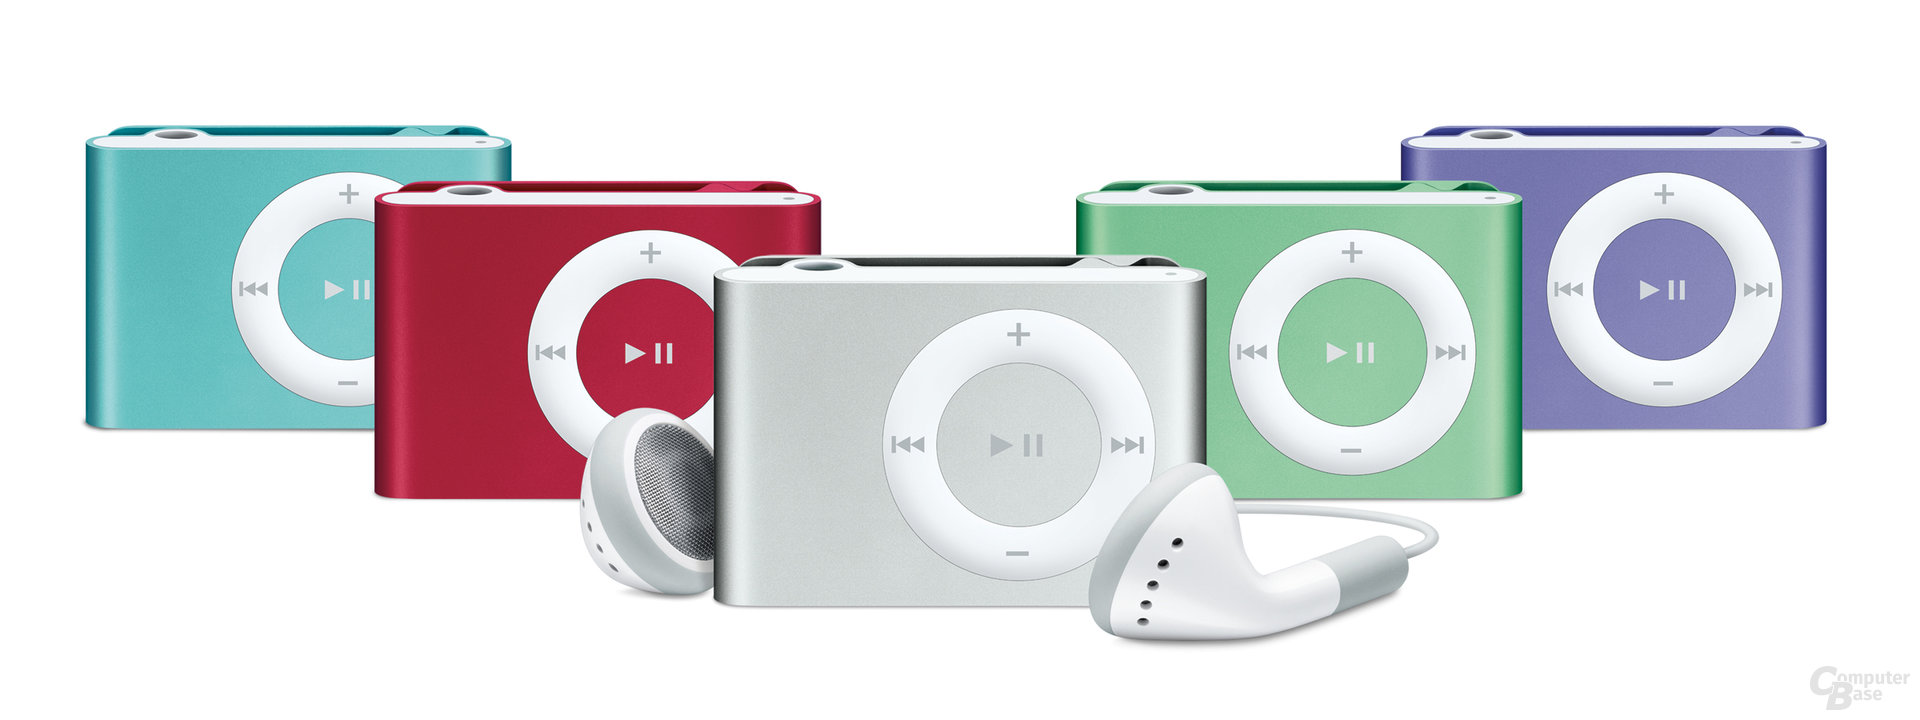 Neuer iPod shuffle